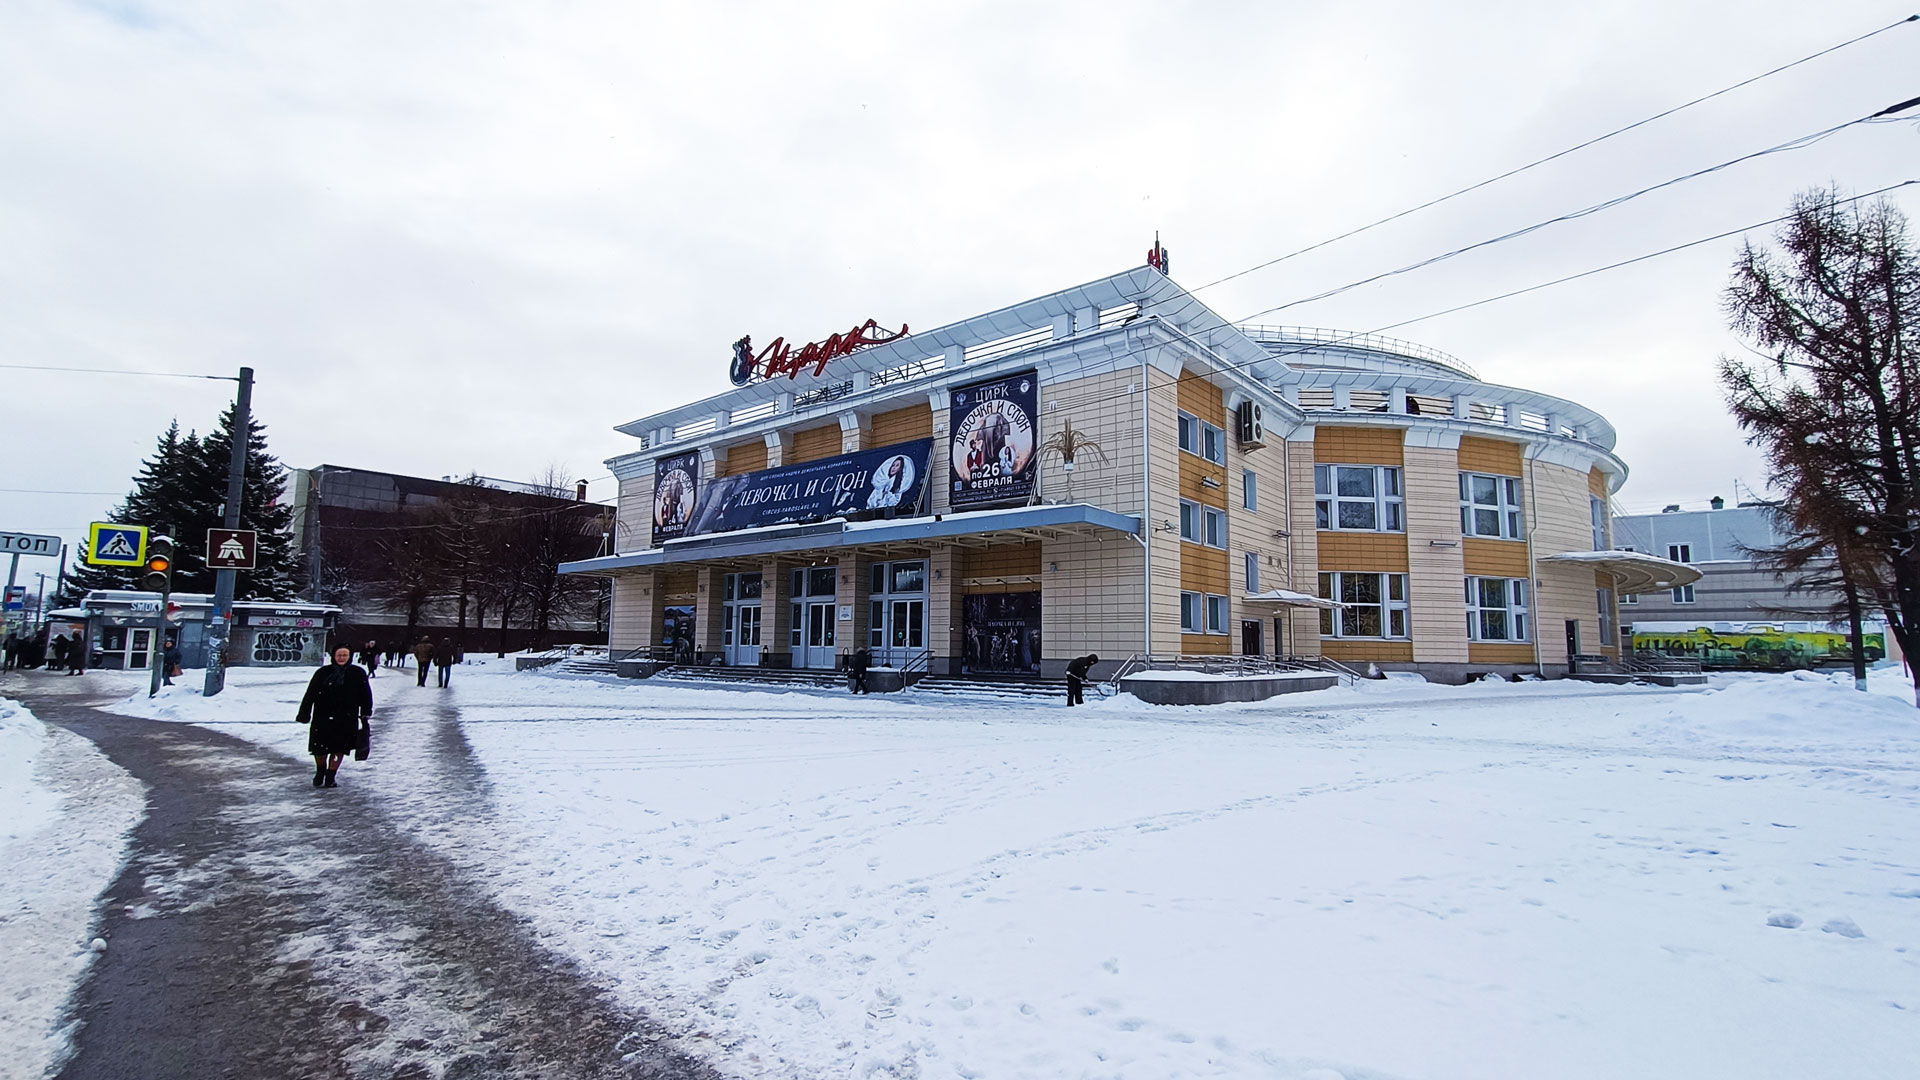 Цирк Ярославль: общий вид здания цирка и территории.